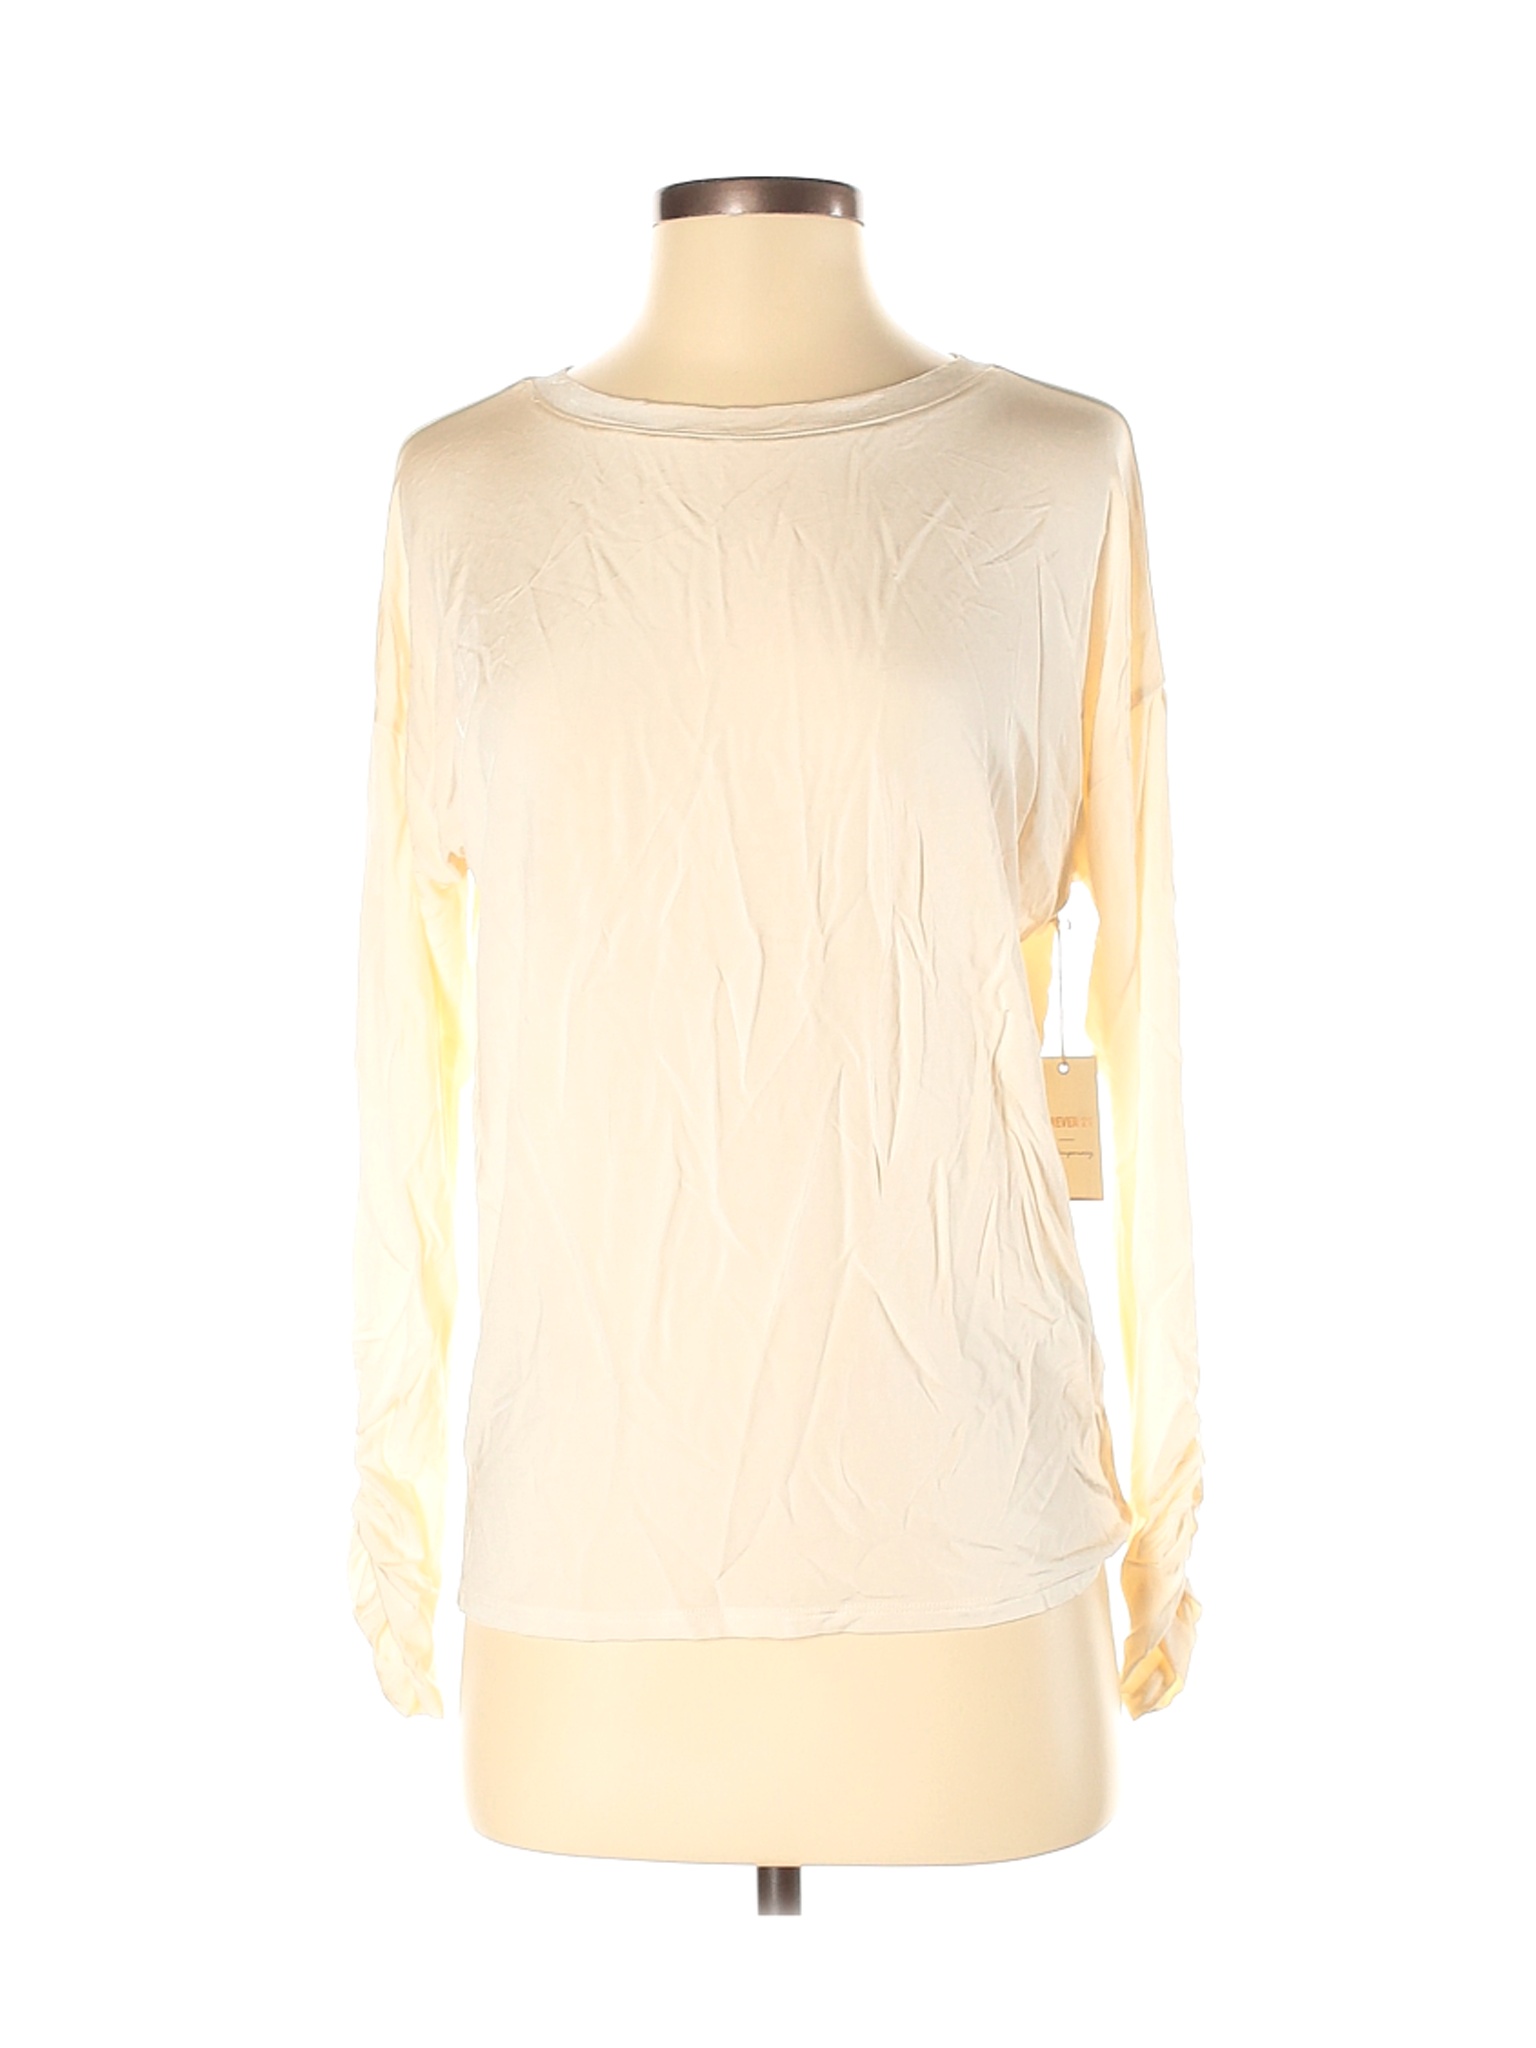 NWT Forever 21 Women Ivory Long Sleeve Top XS | eBay